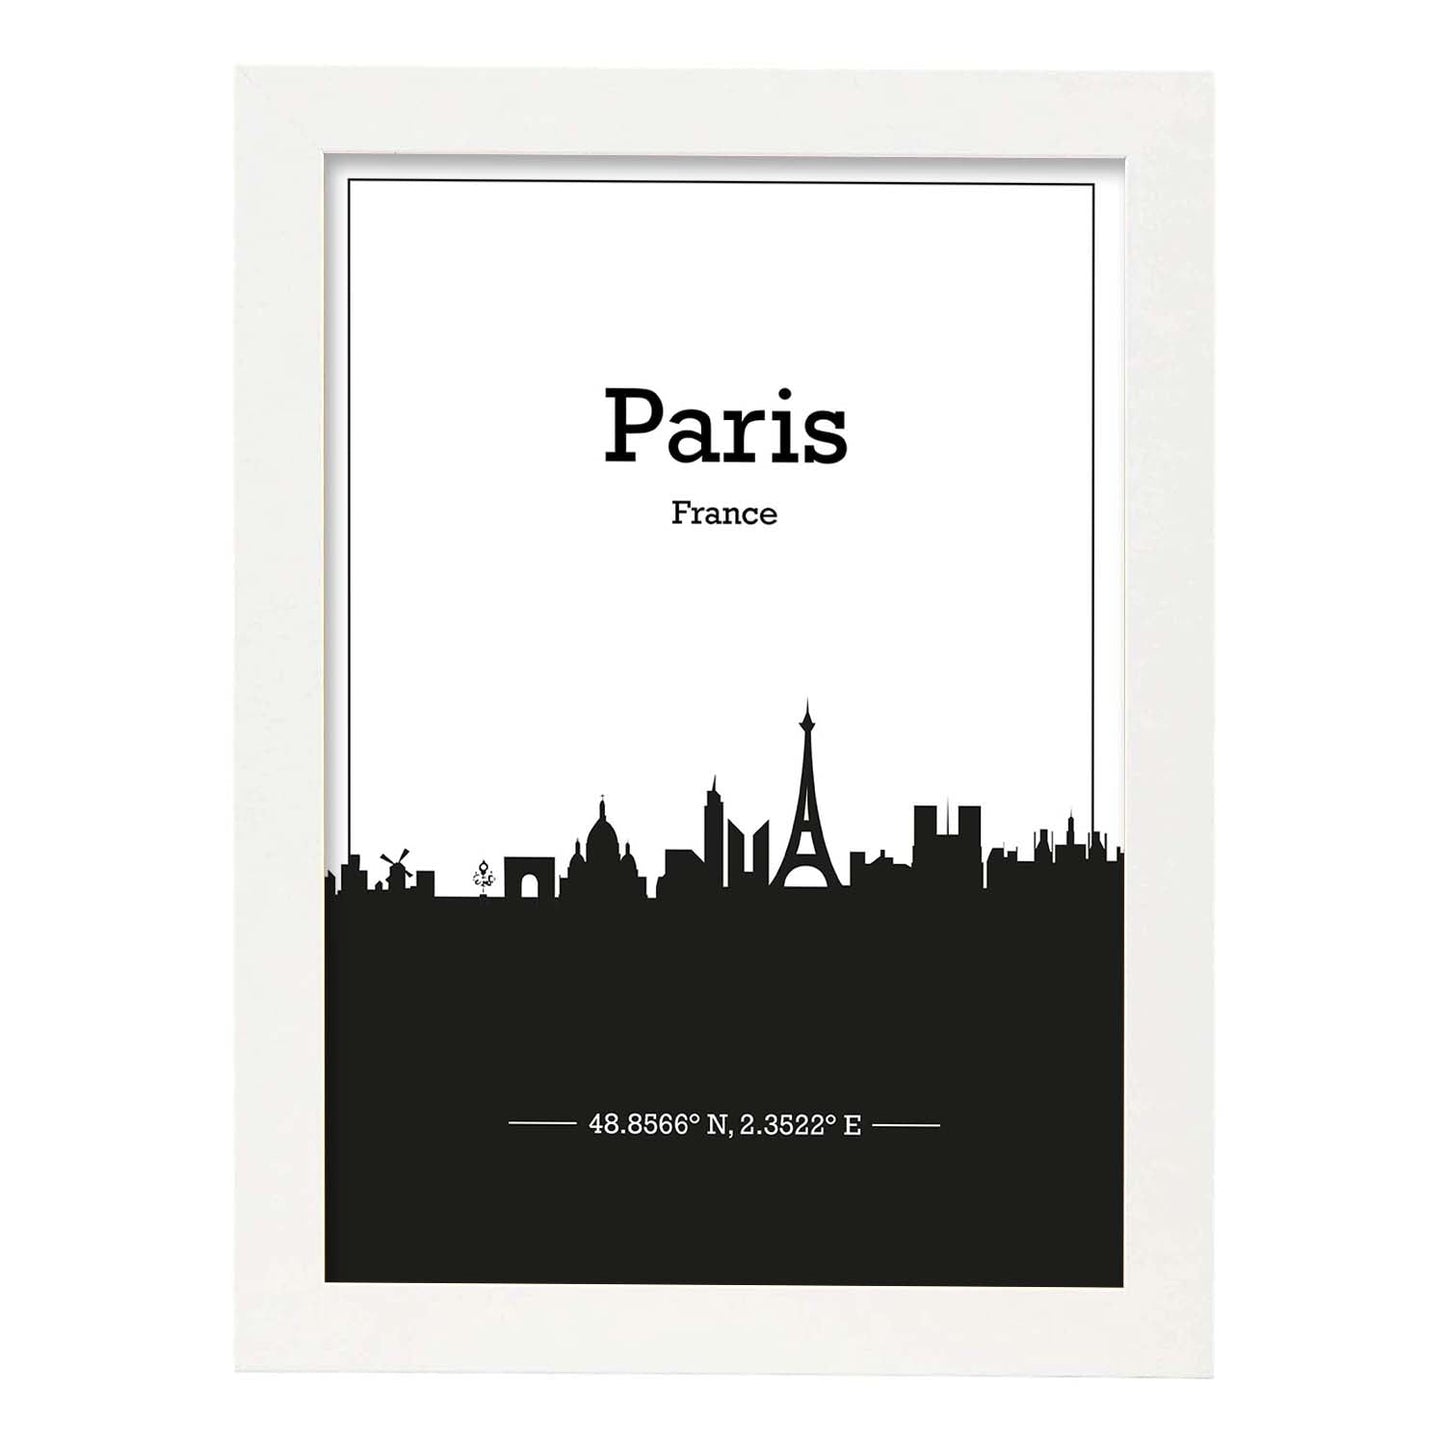 Poster con mapa de Paris - Francia. Láminas con Skyline de ciudades de Francia con sombra negra.-Artwork-Nacnic-A4-Marco Blanco-Nacnic Estudio SL